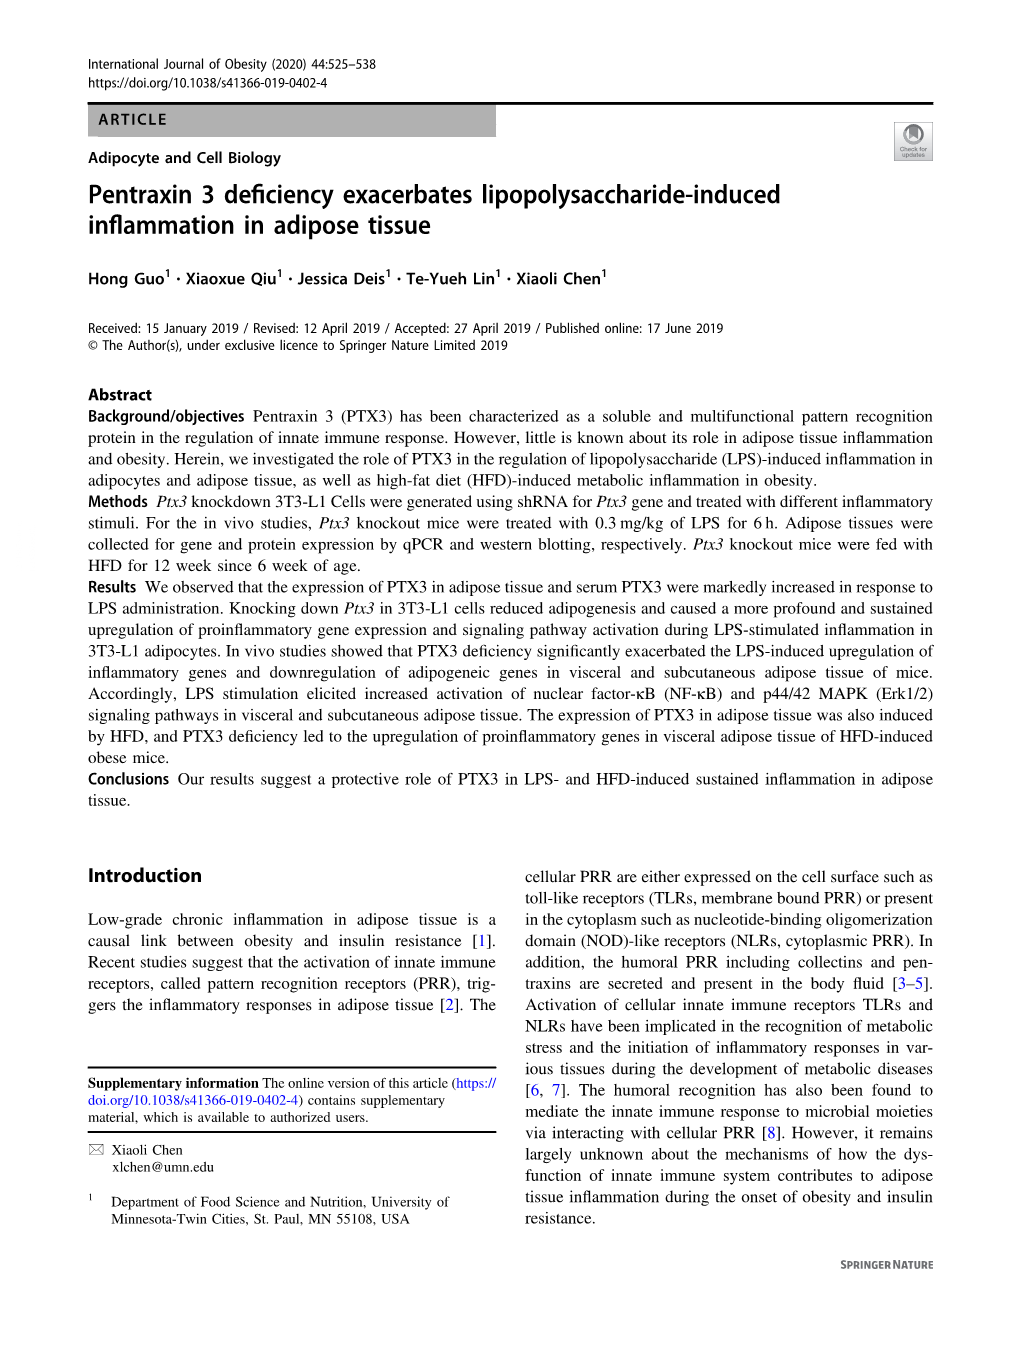 Pentraxin 3 Deficiency Exacerbates Lipopolysaccharide-Induced Inflammation in Adipose Tissue